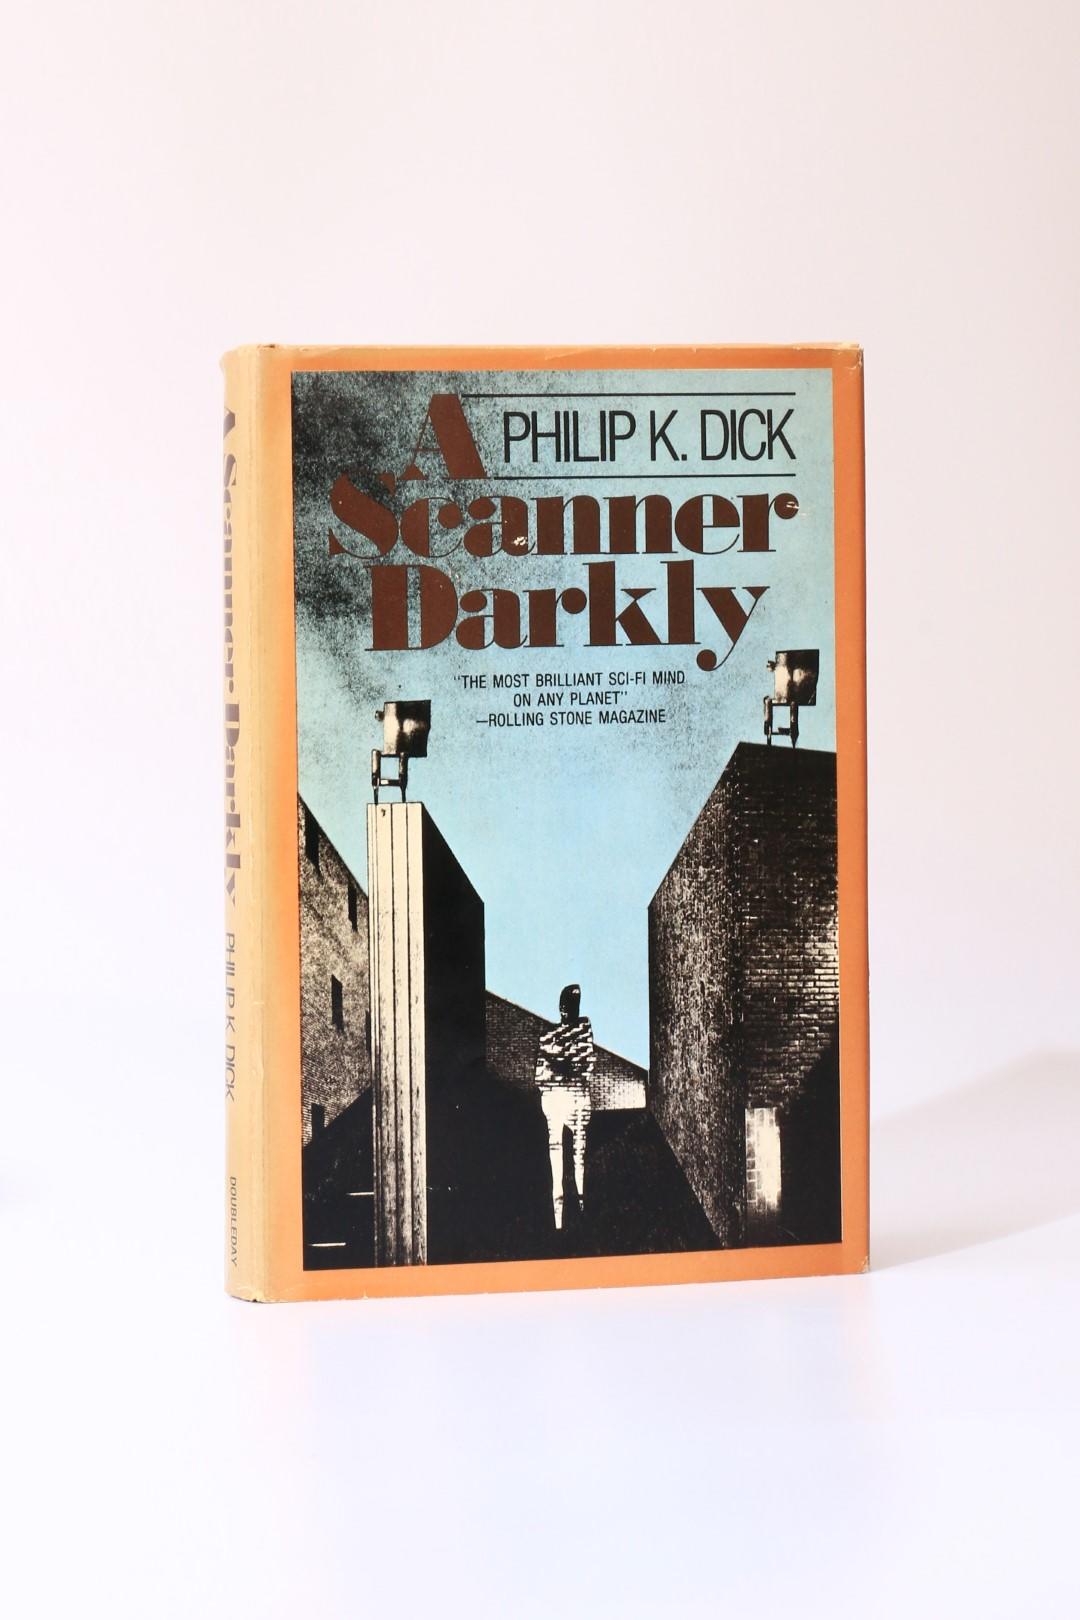 Philip K. Dick - A Scanner Darkly - Doubleday, 1977, First Edition.